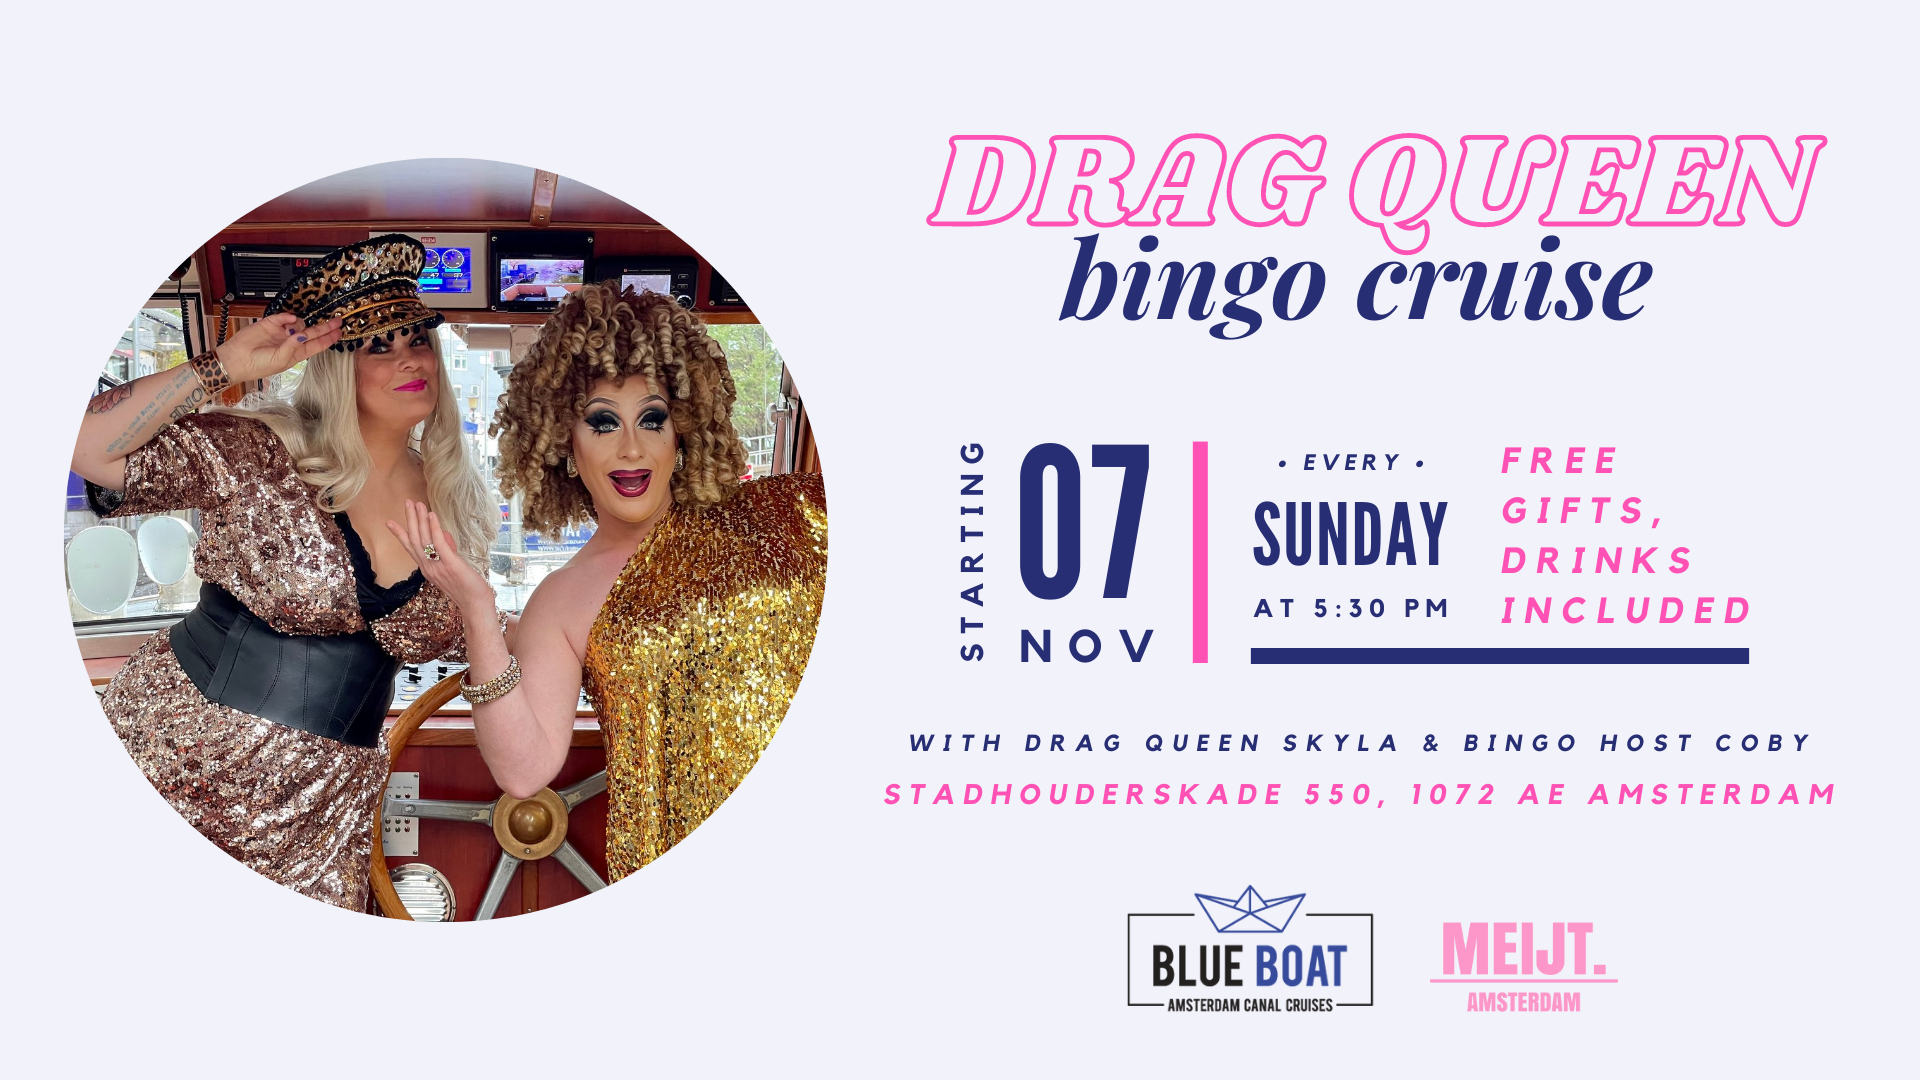 drag queen bingo cruise